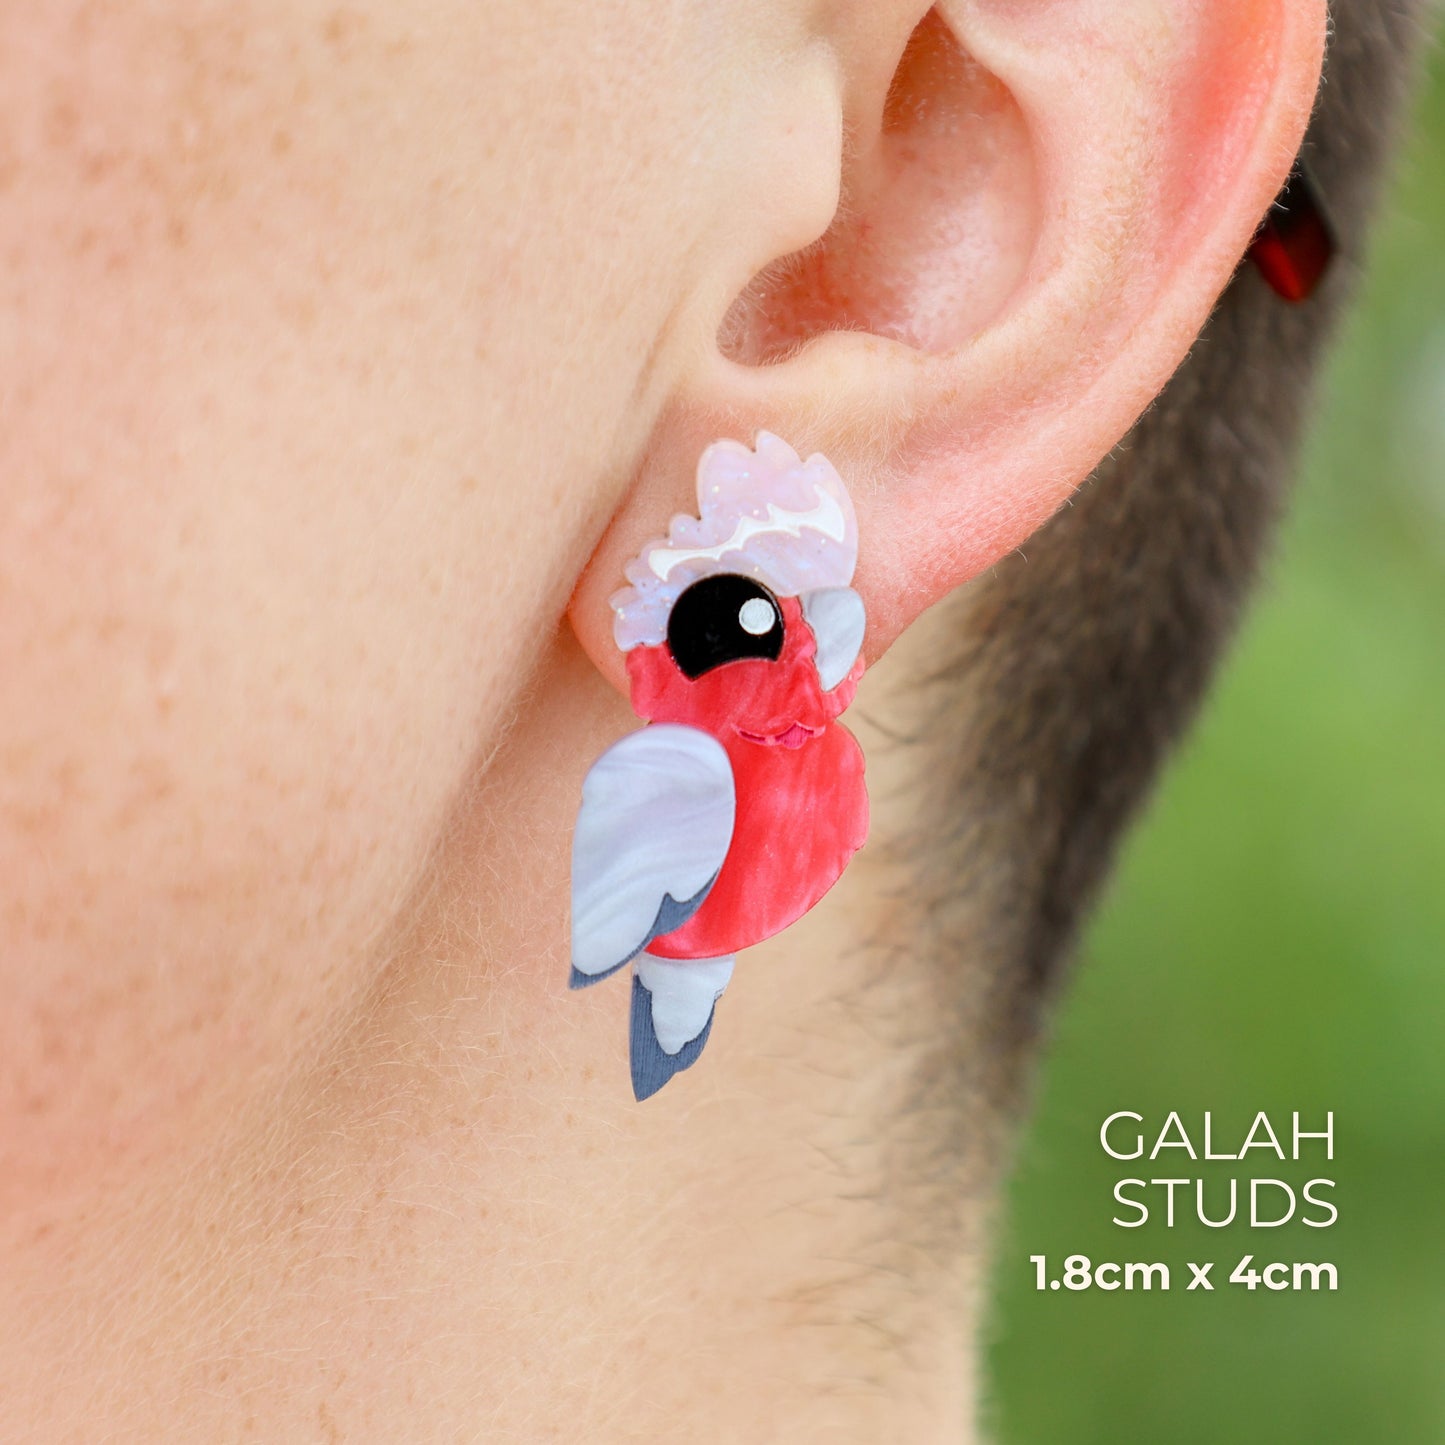 BINKABU Galah handmade acrylic bird earrings